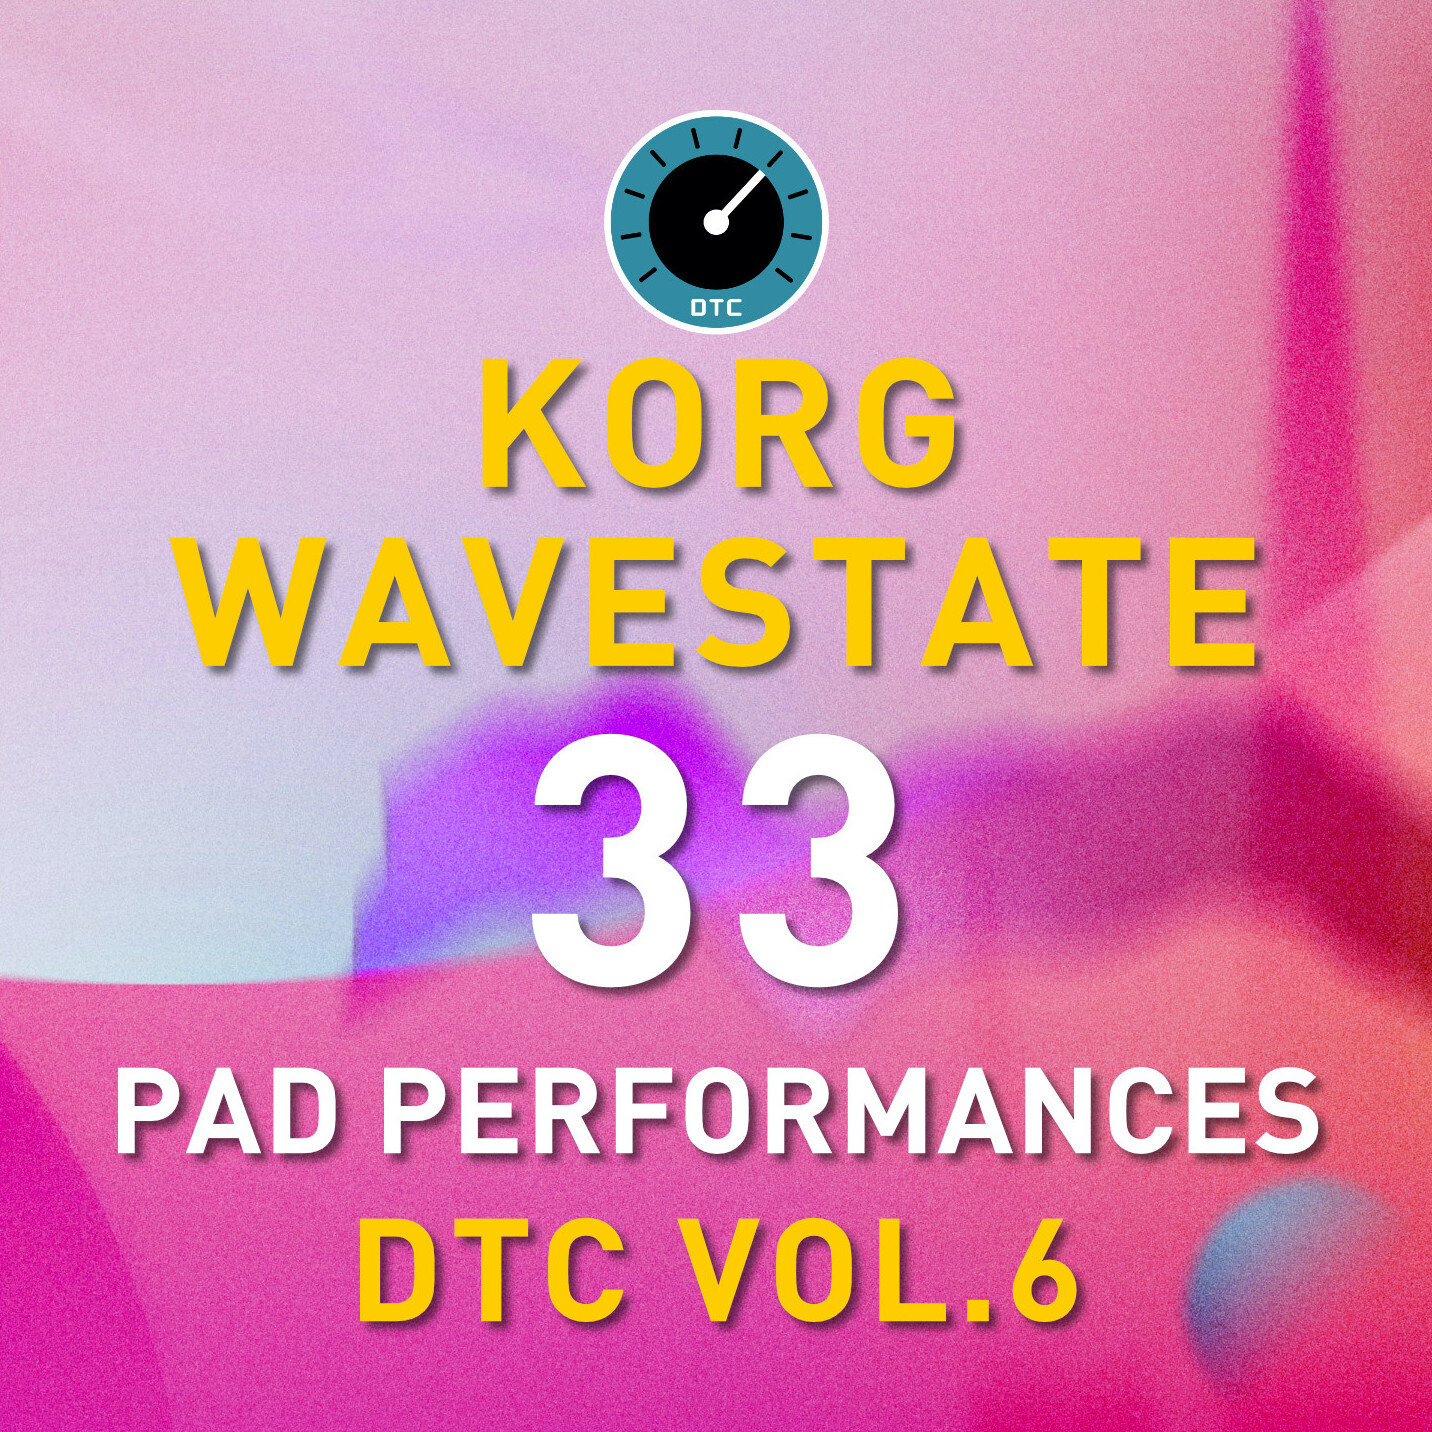 Korg Wavestate - DTC Vol.6 PADS - 33 Performance Presets